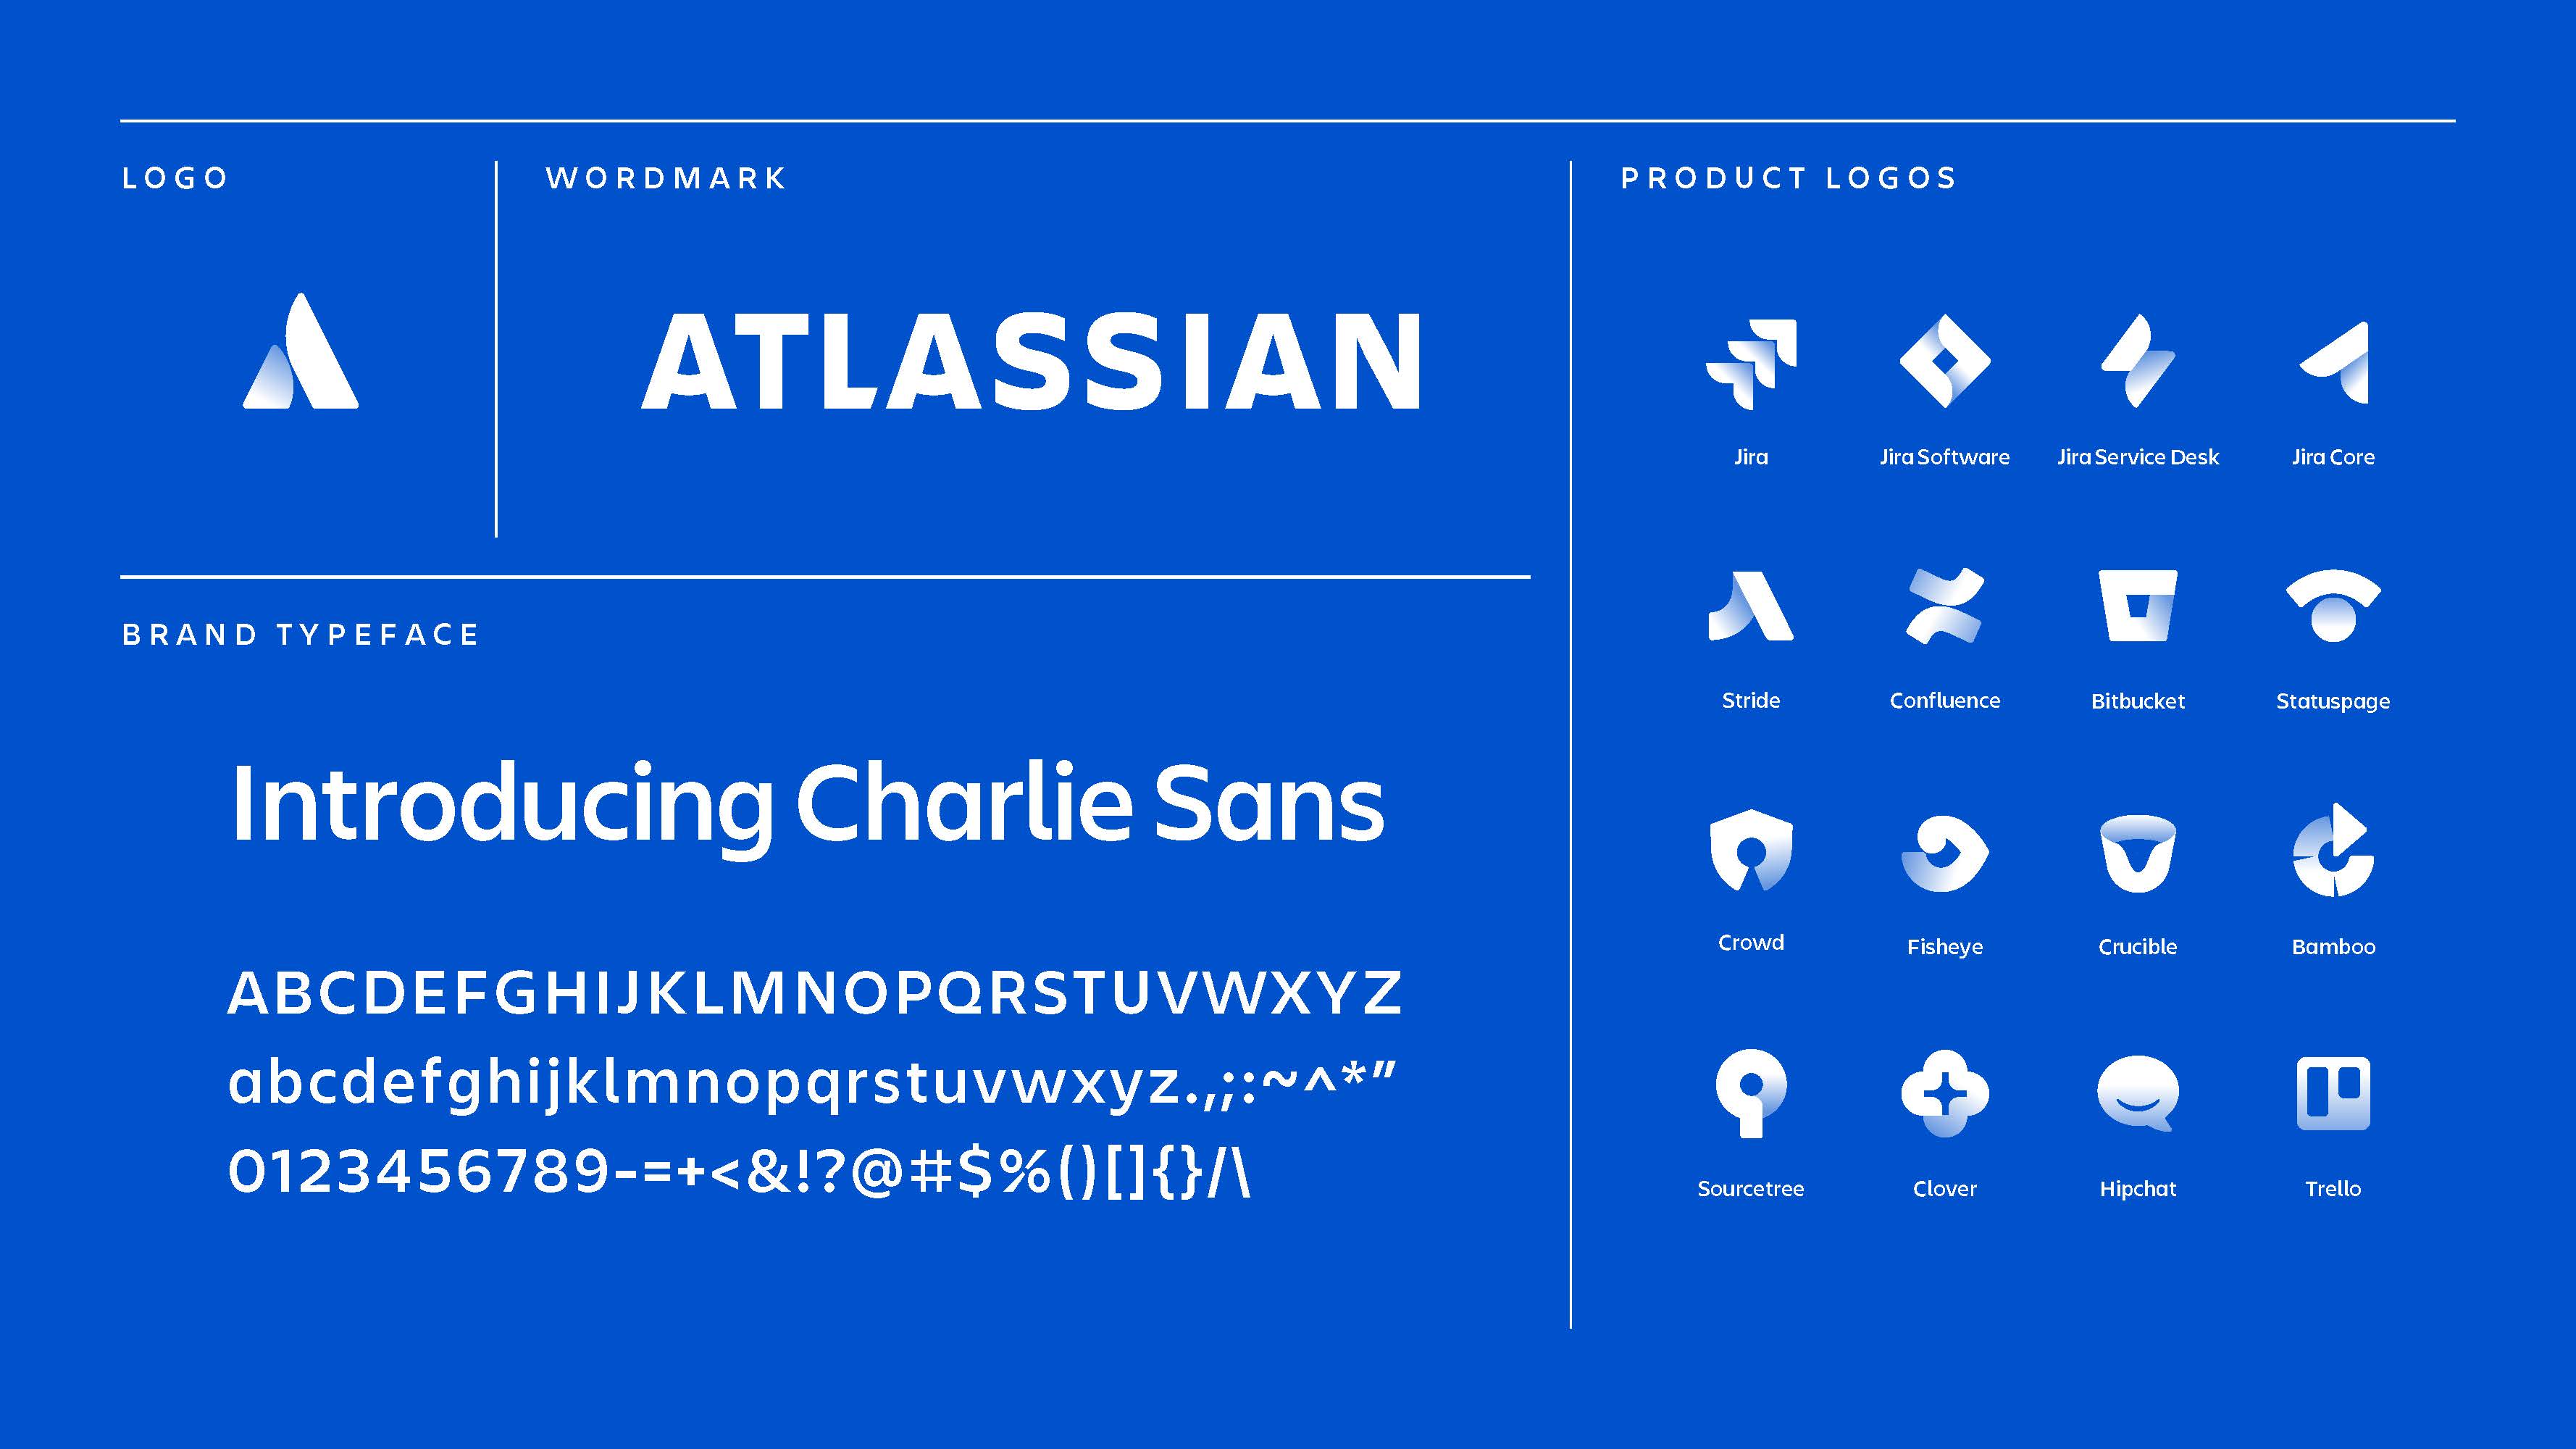 Bitbucket Logo - Our bold new brand - Atlassian Blog